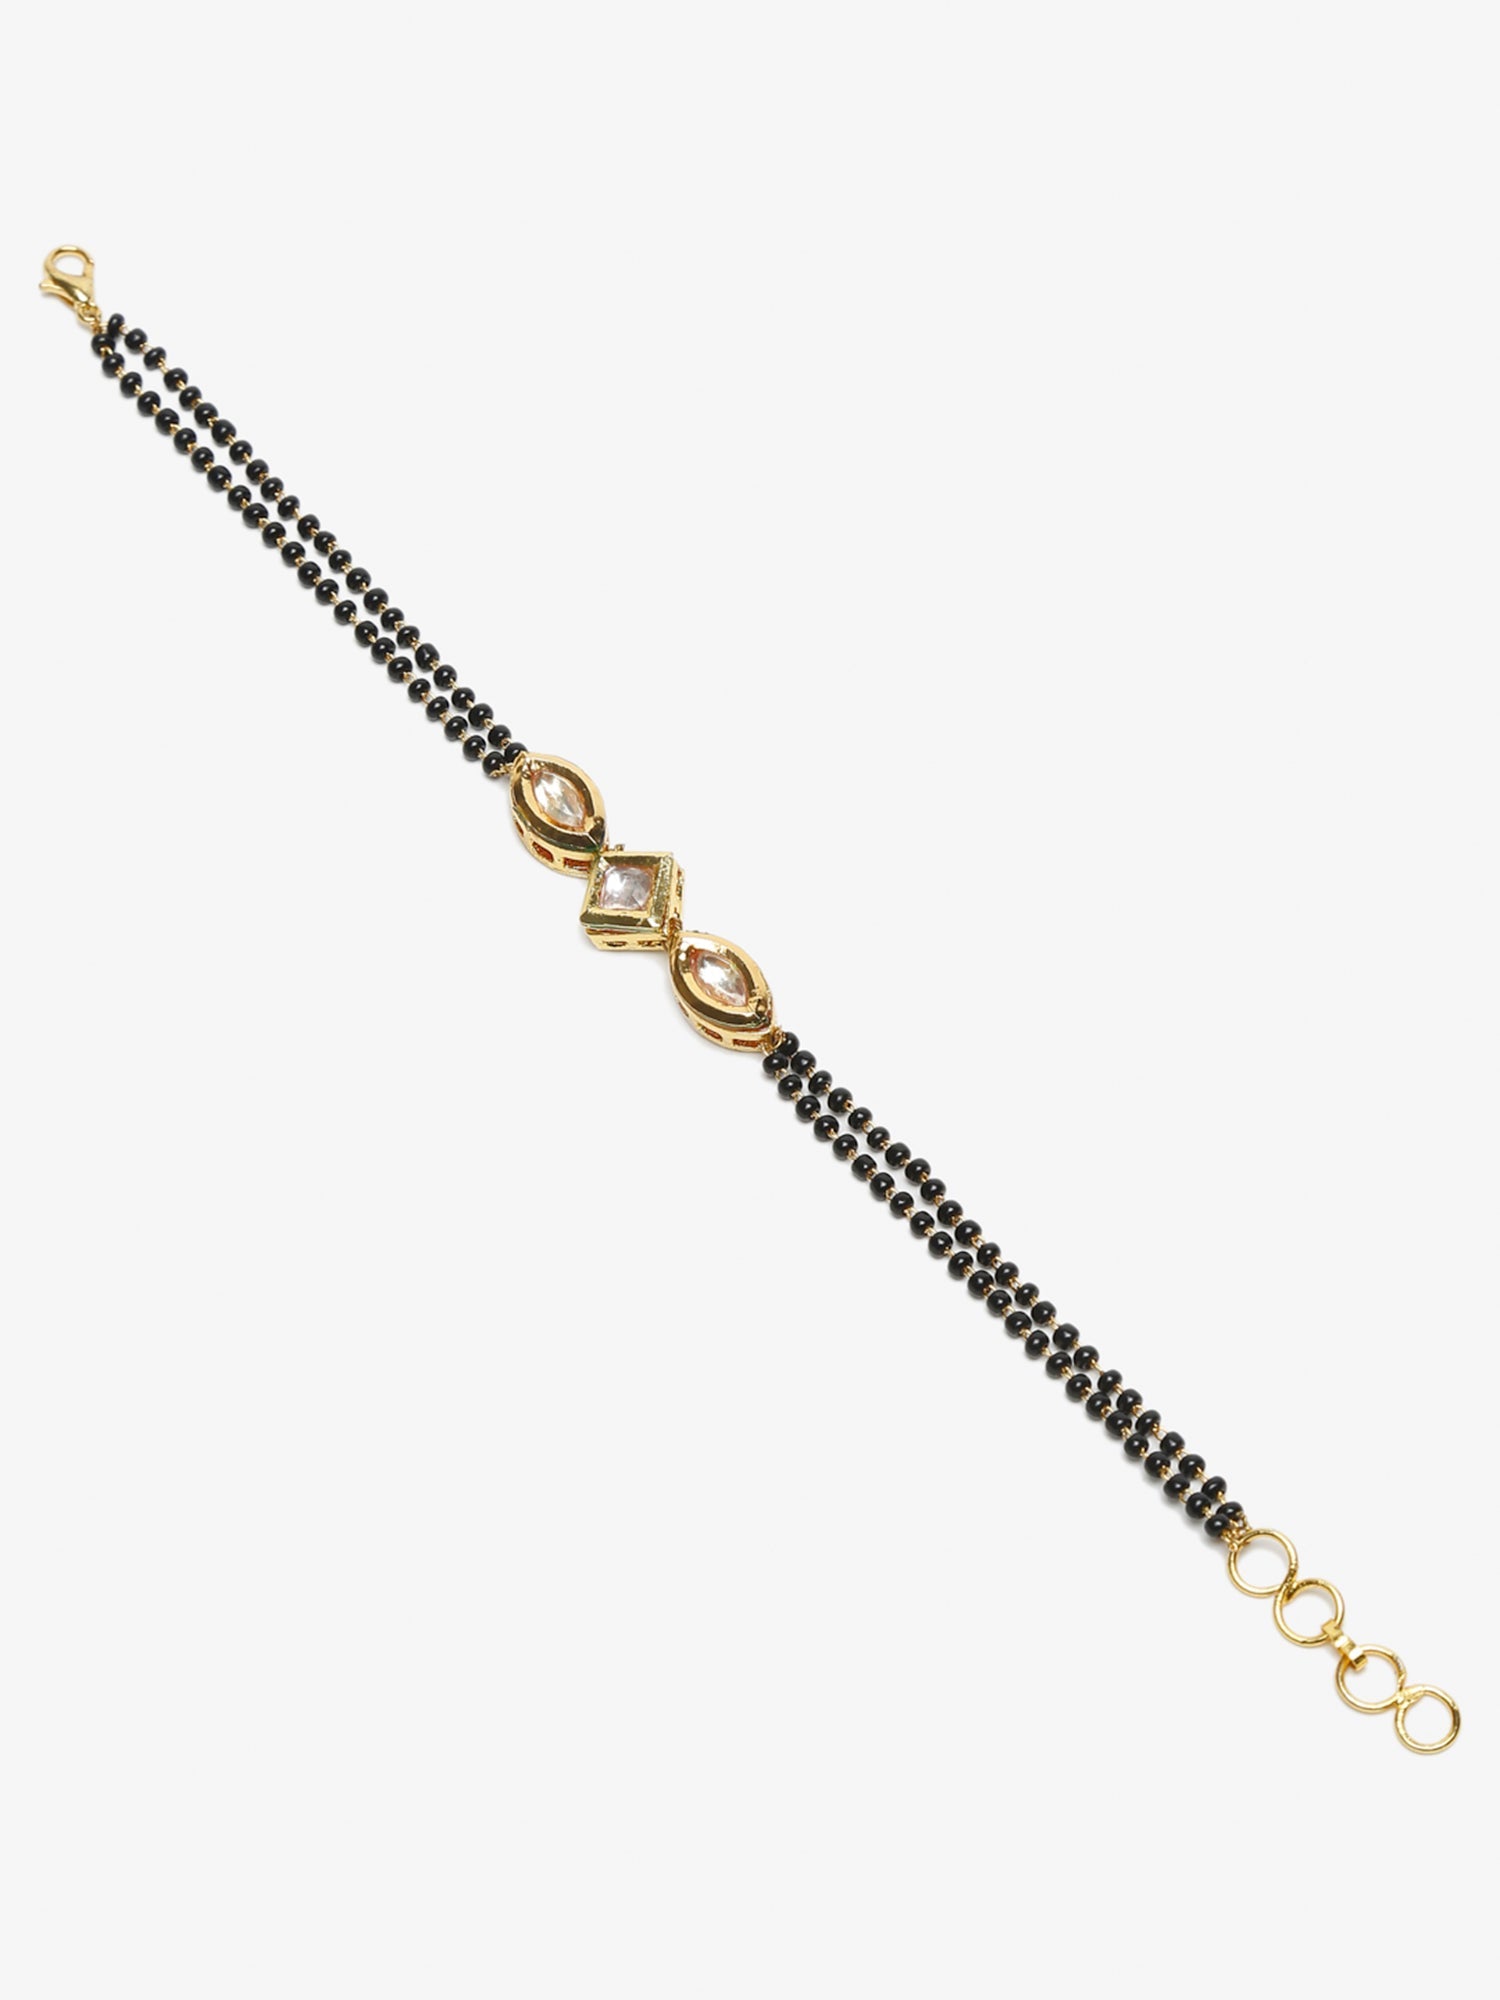 Small Gold Beads Mangalsutra Bracelet - Swaabhi